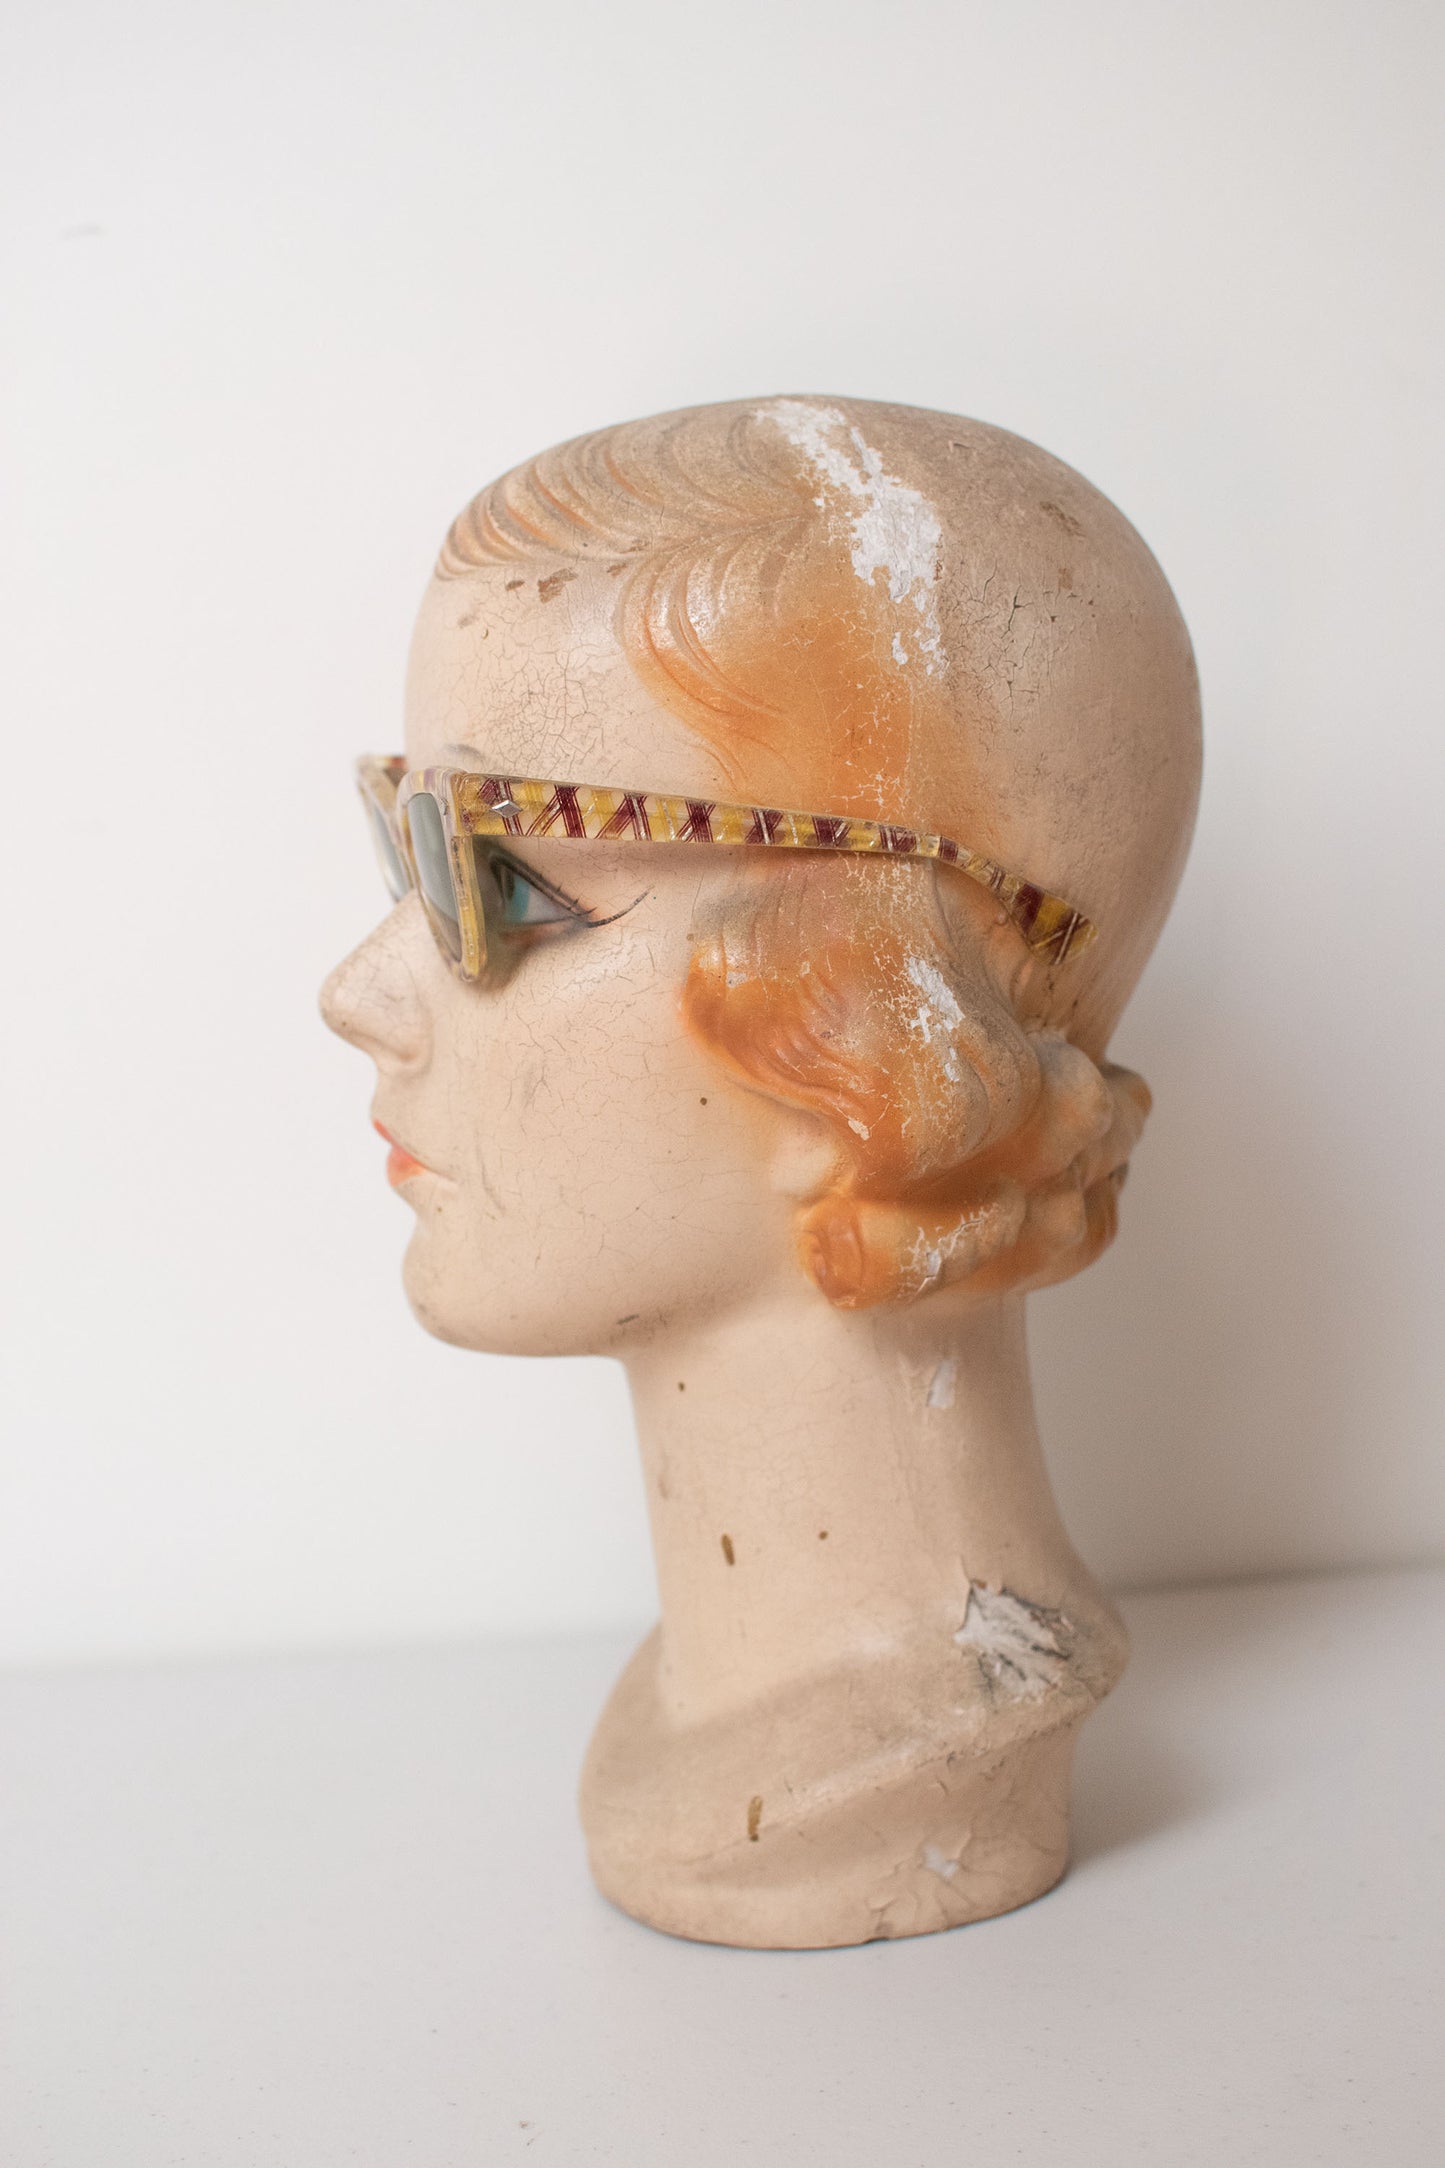 1950s Sunglasses | Plaid Ribbon